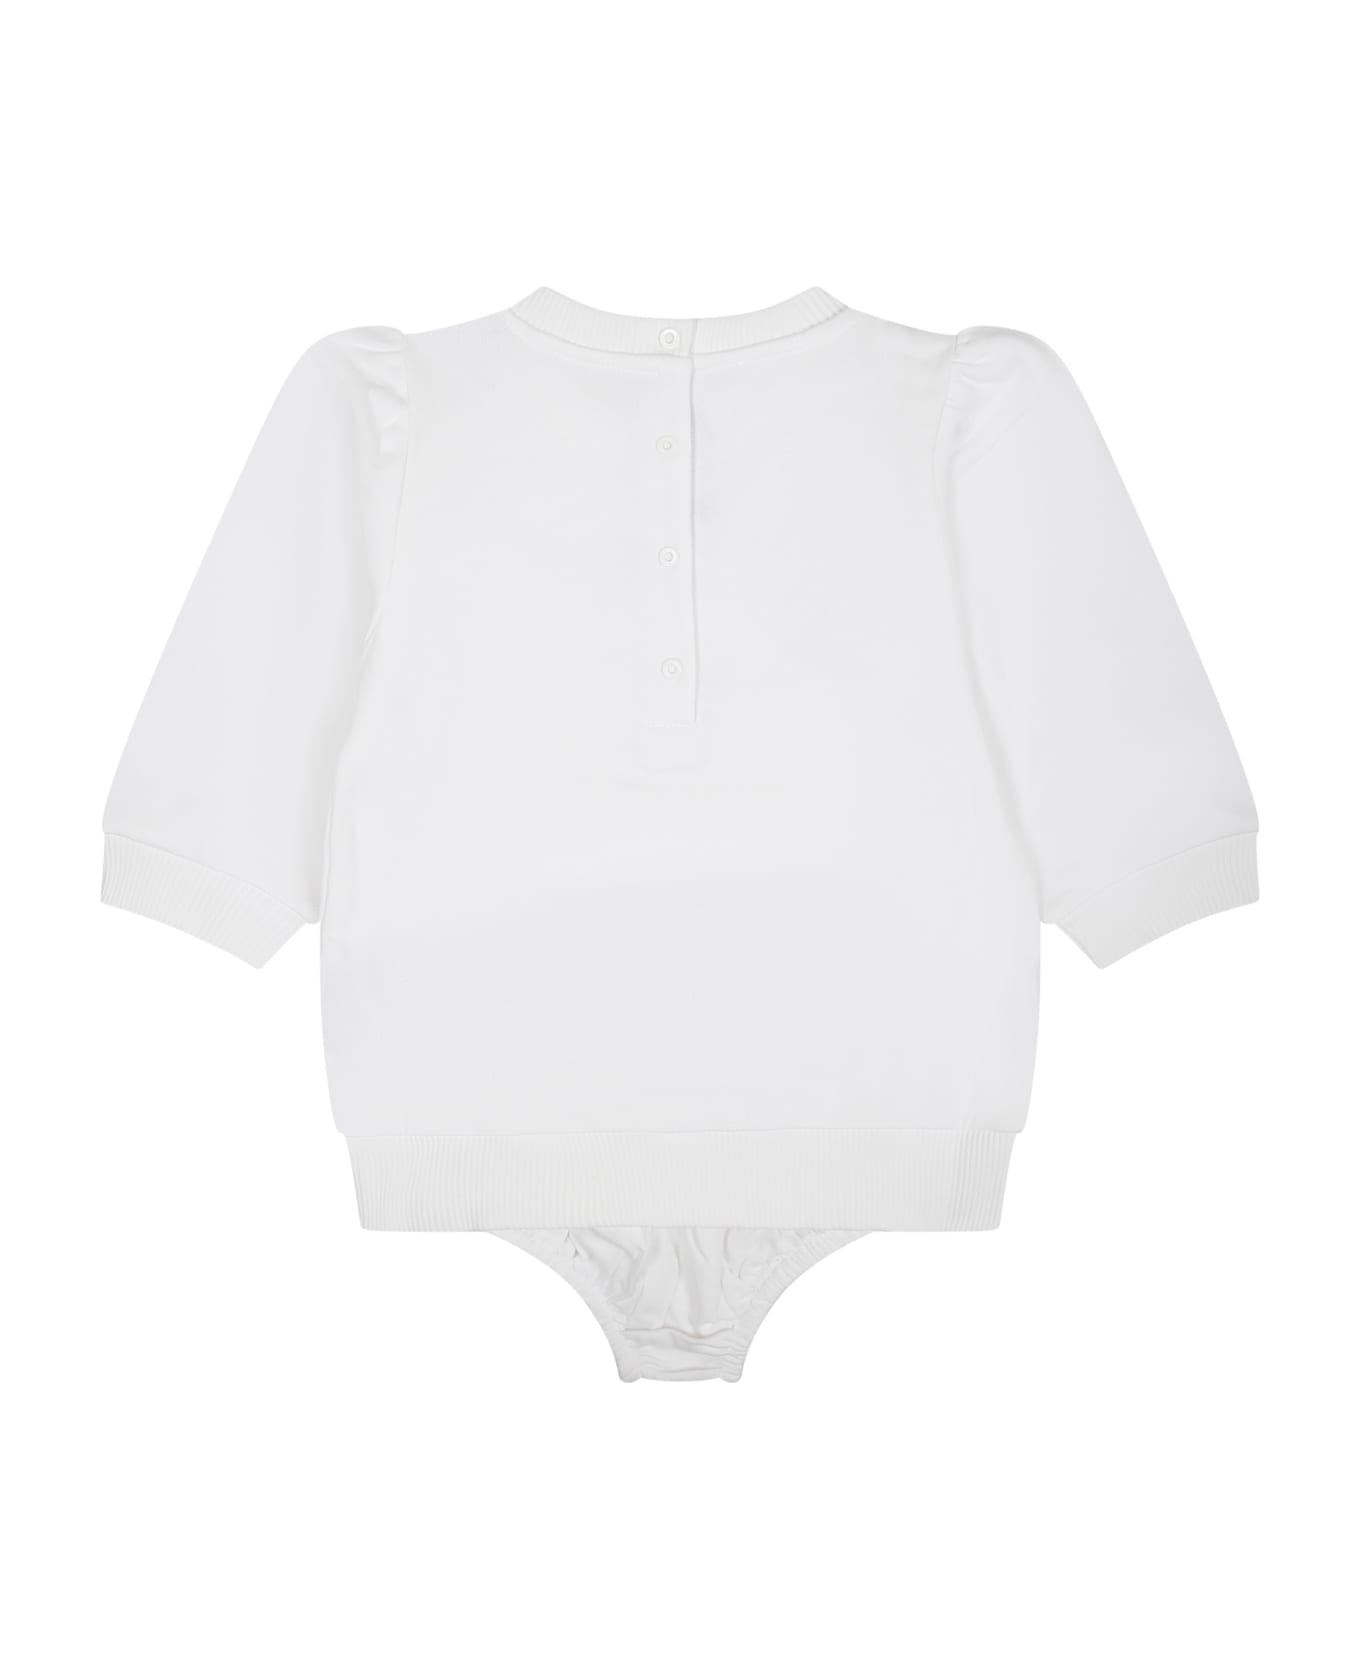 Balmain White Dress For Baby Girl With Logo - White